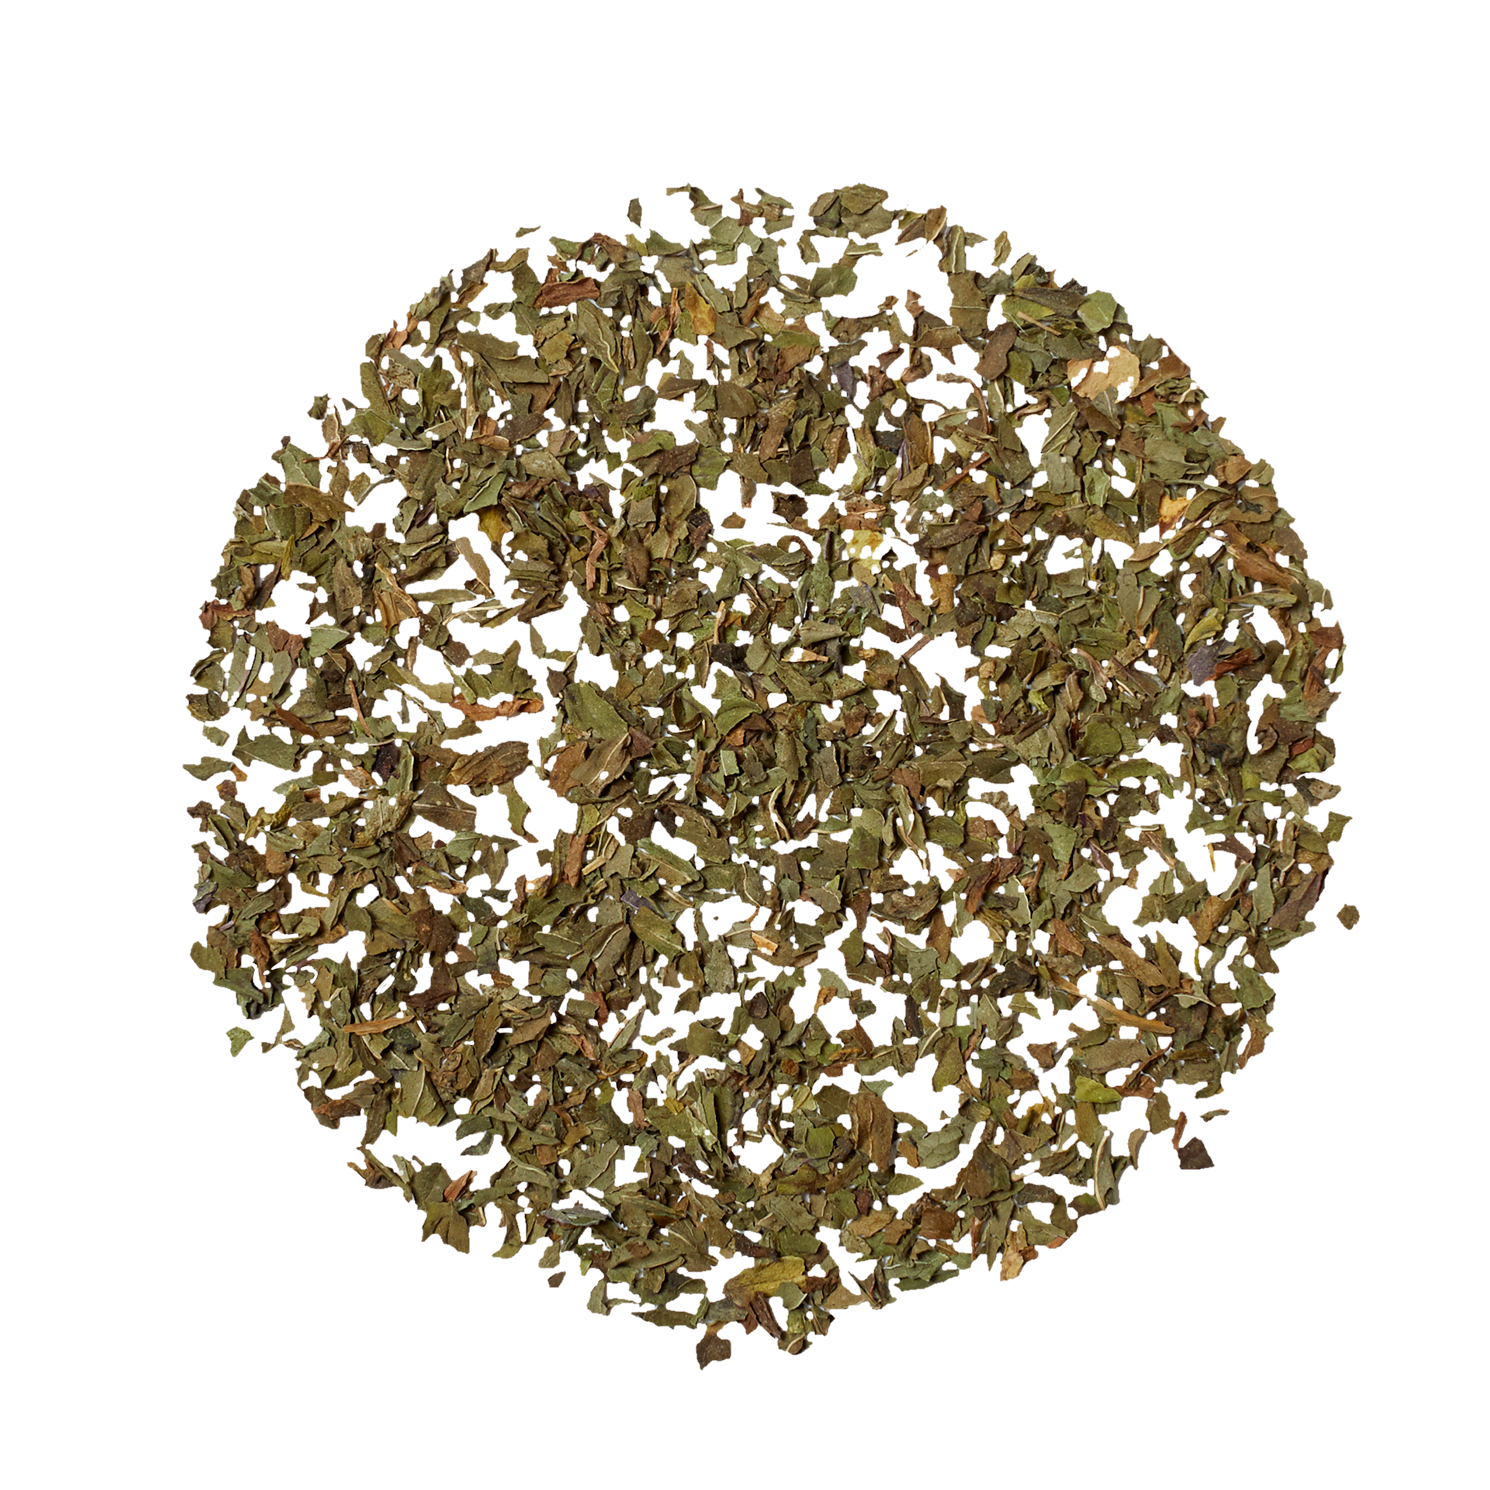 Peppermint Loose Leaf